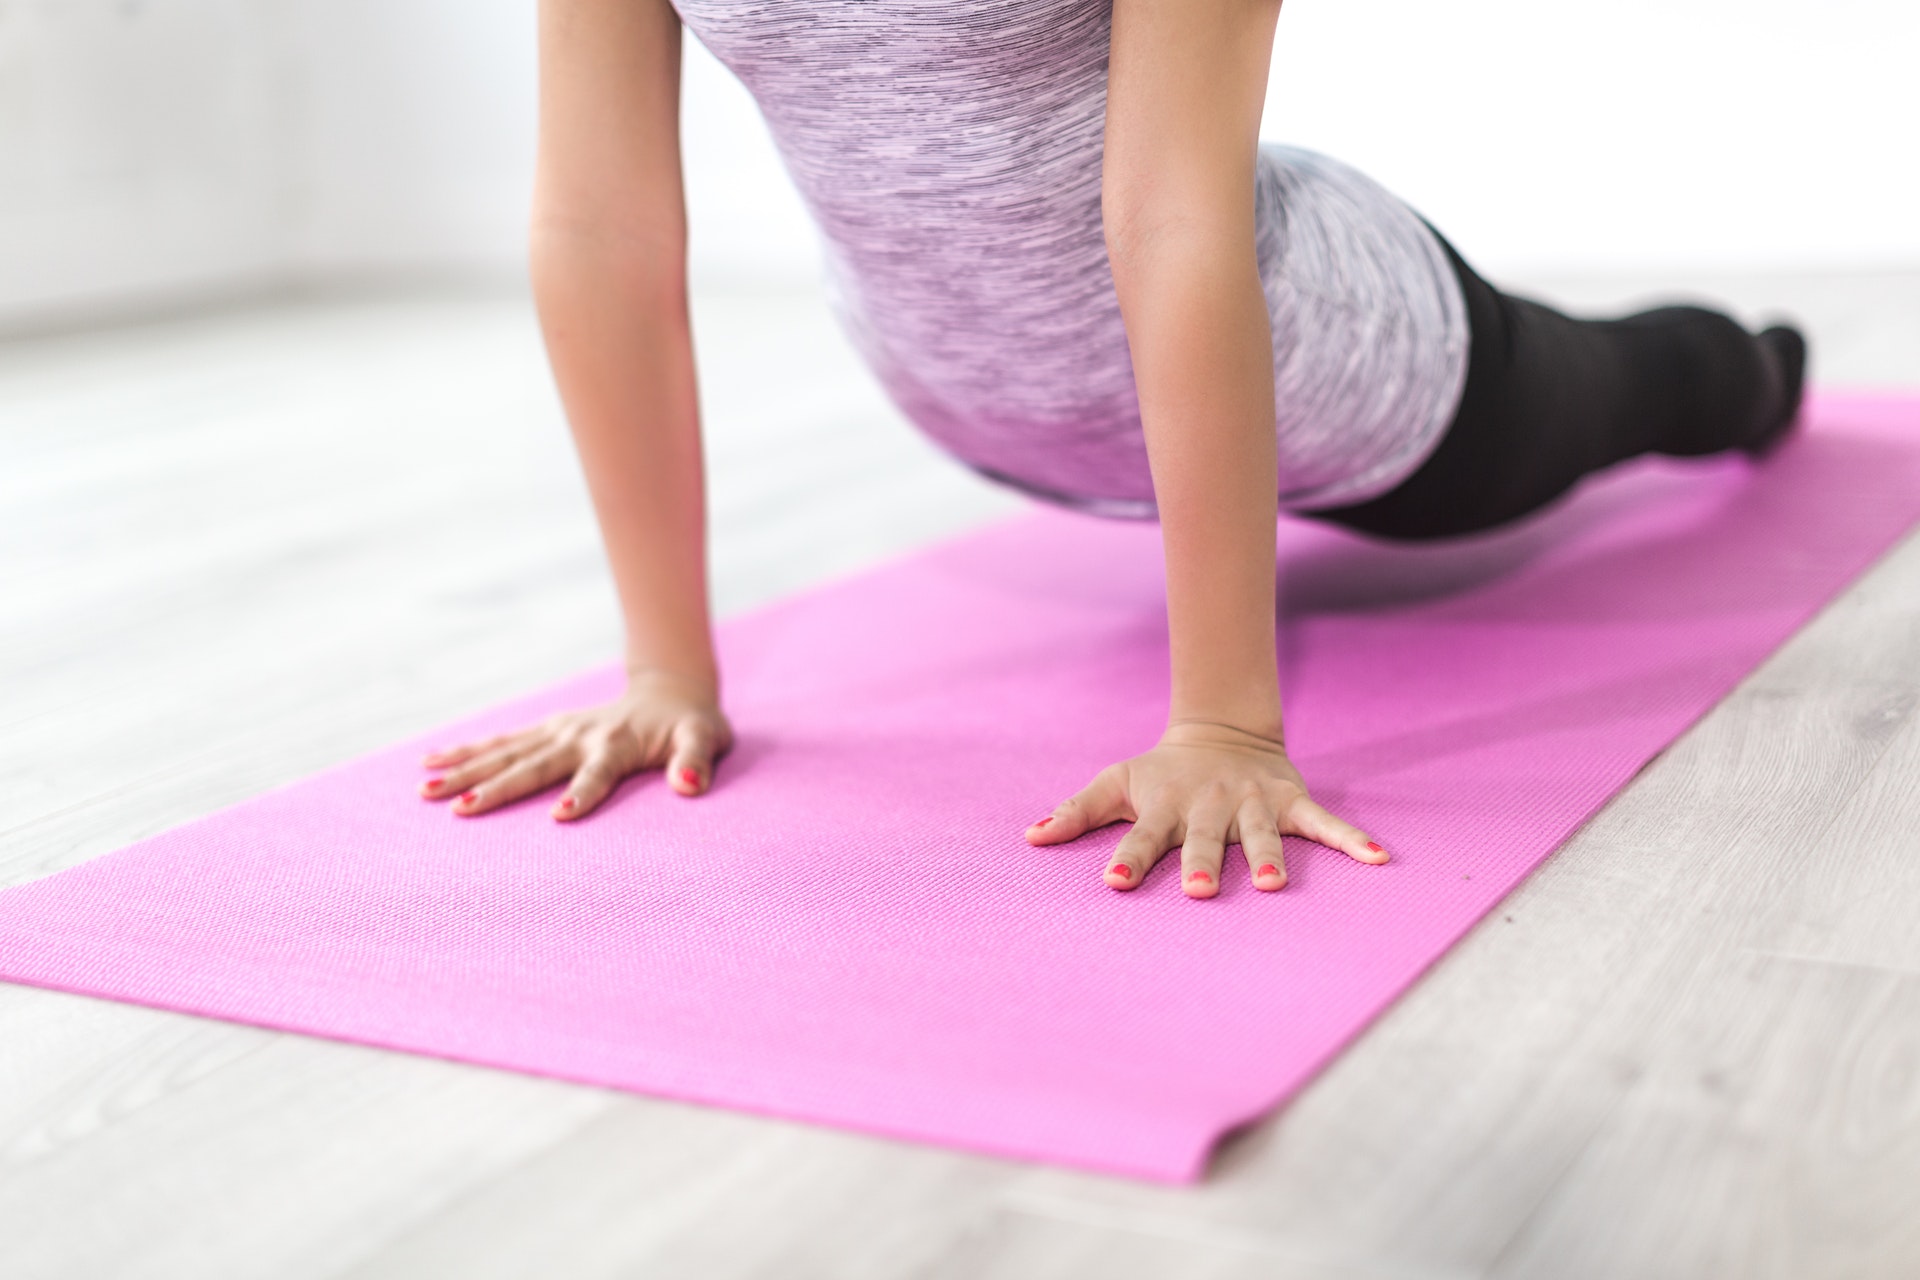 A woman doing yoga on a purple mat.